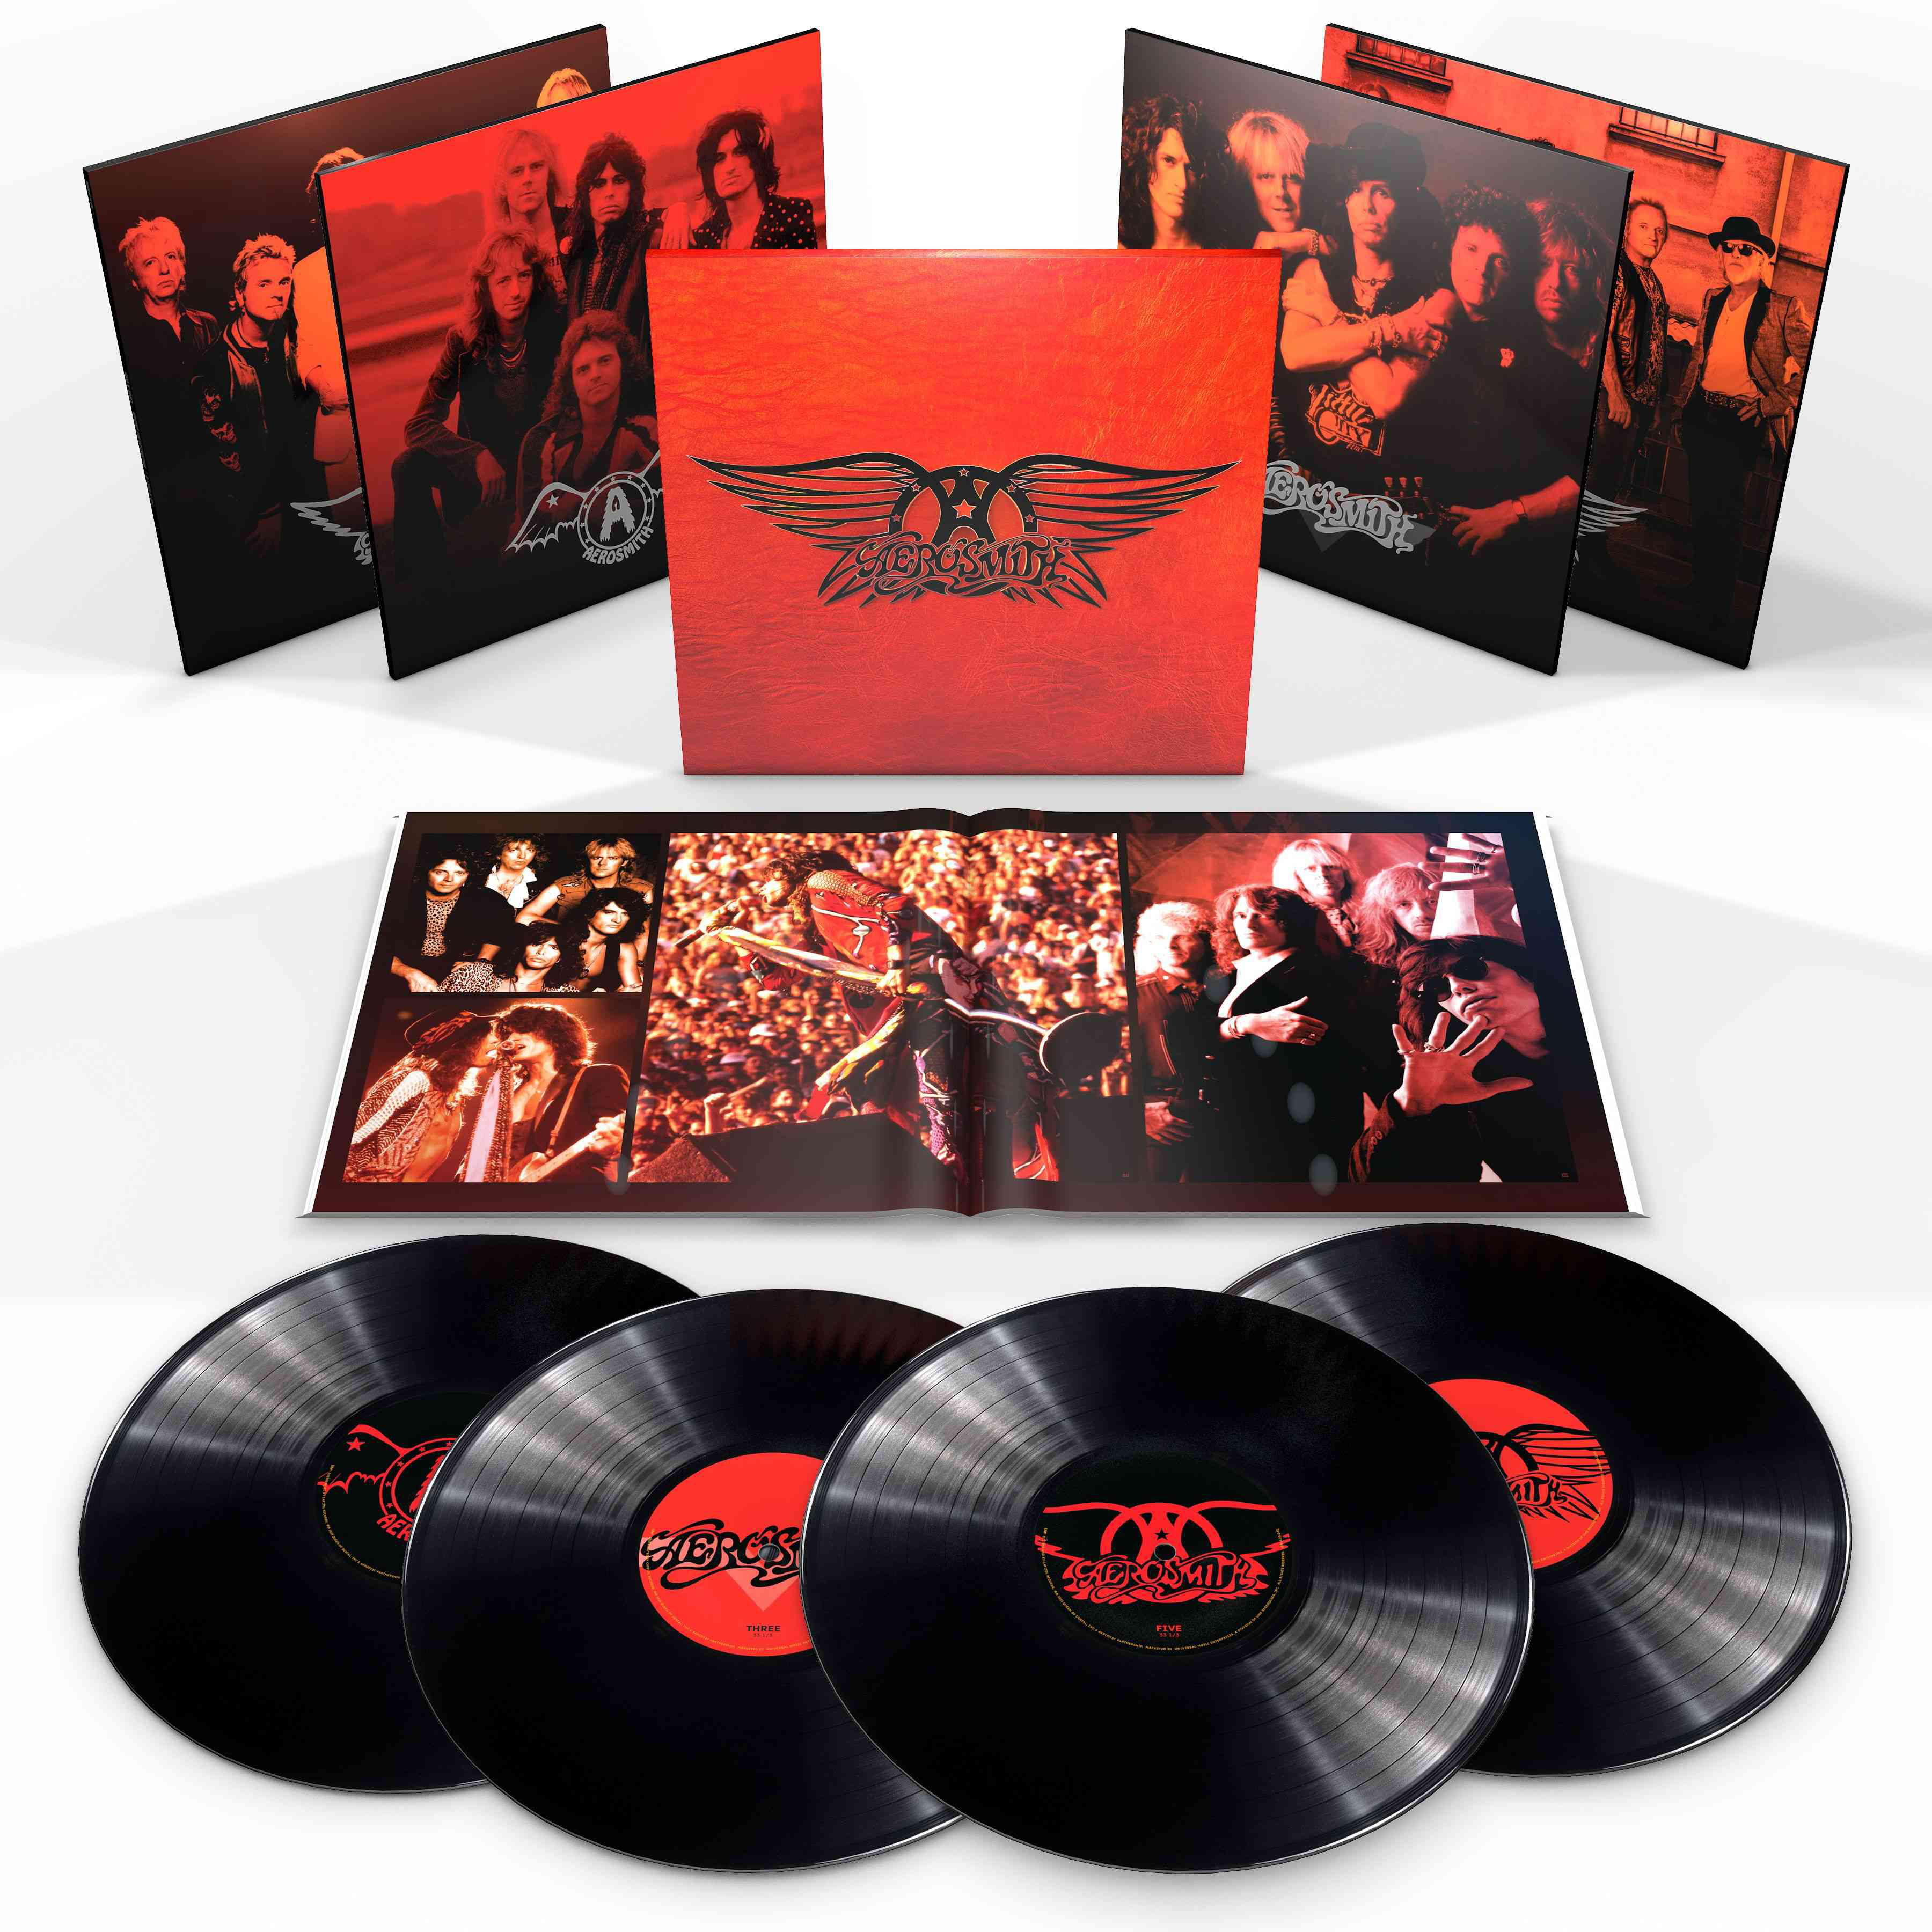 Aerosmith - Greatest 4LP) Hits (Vinyl) (Limited - Deluxe